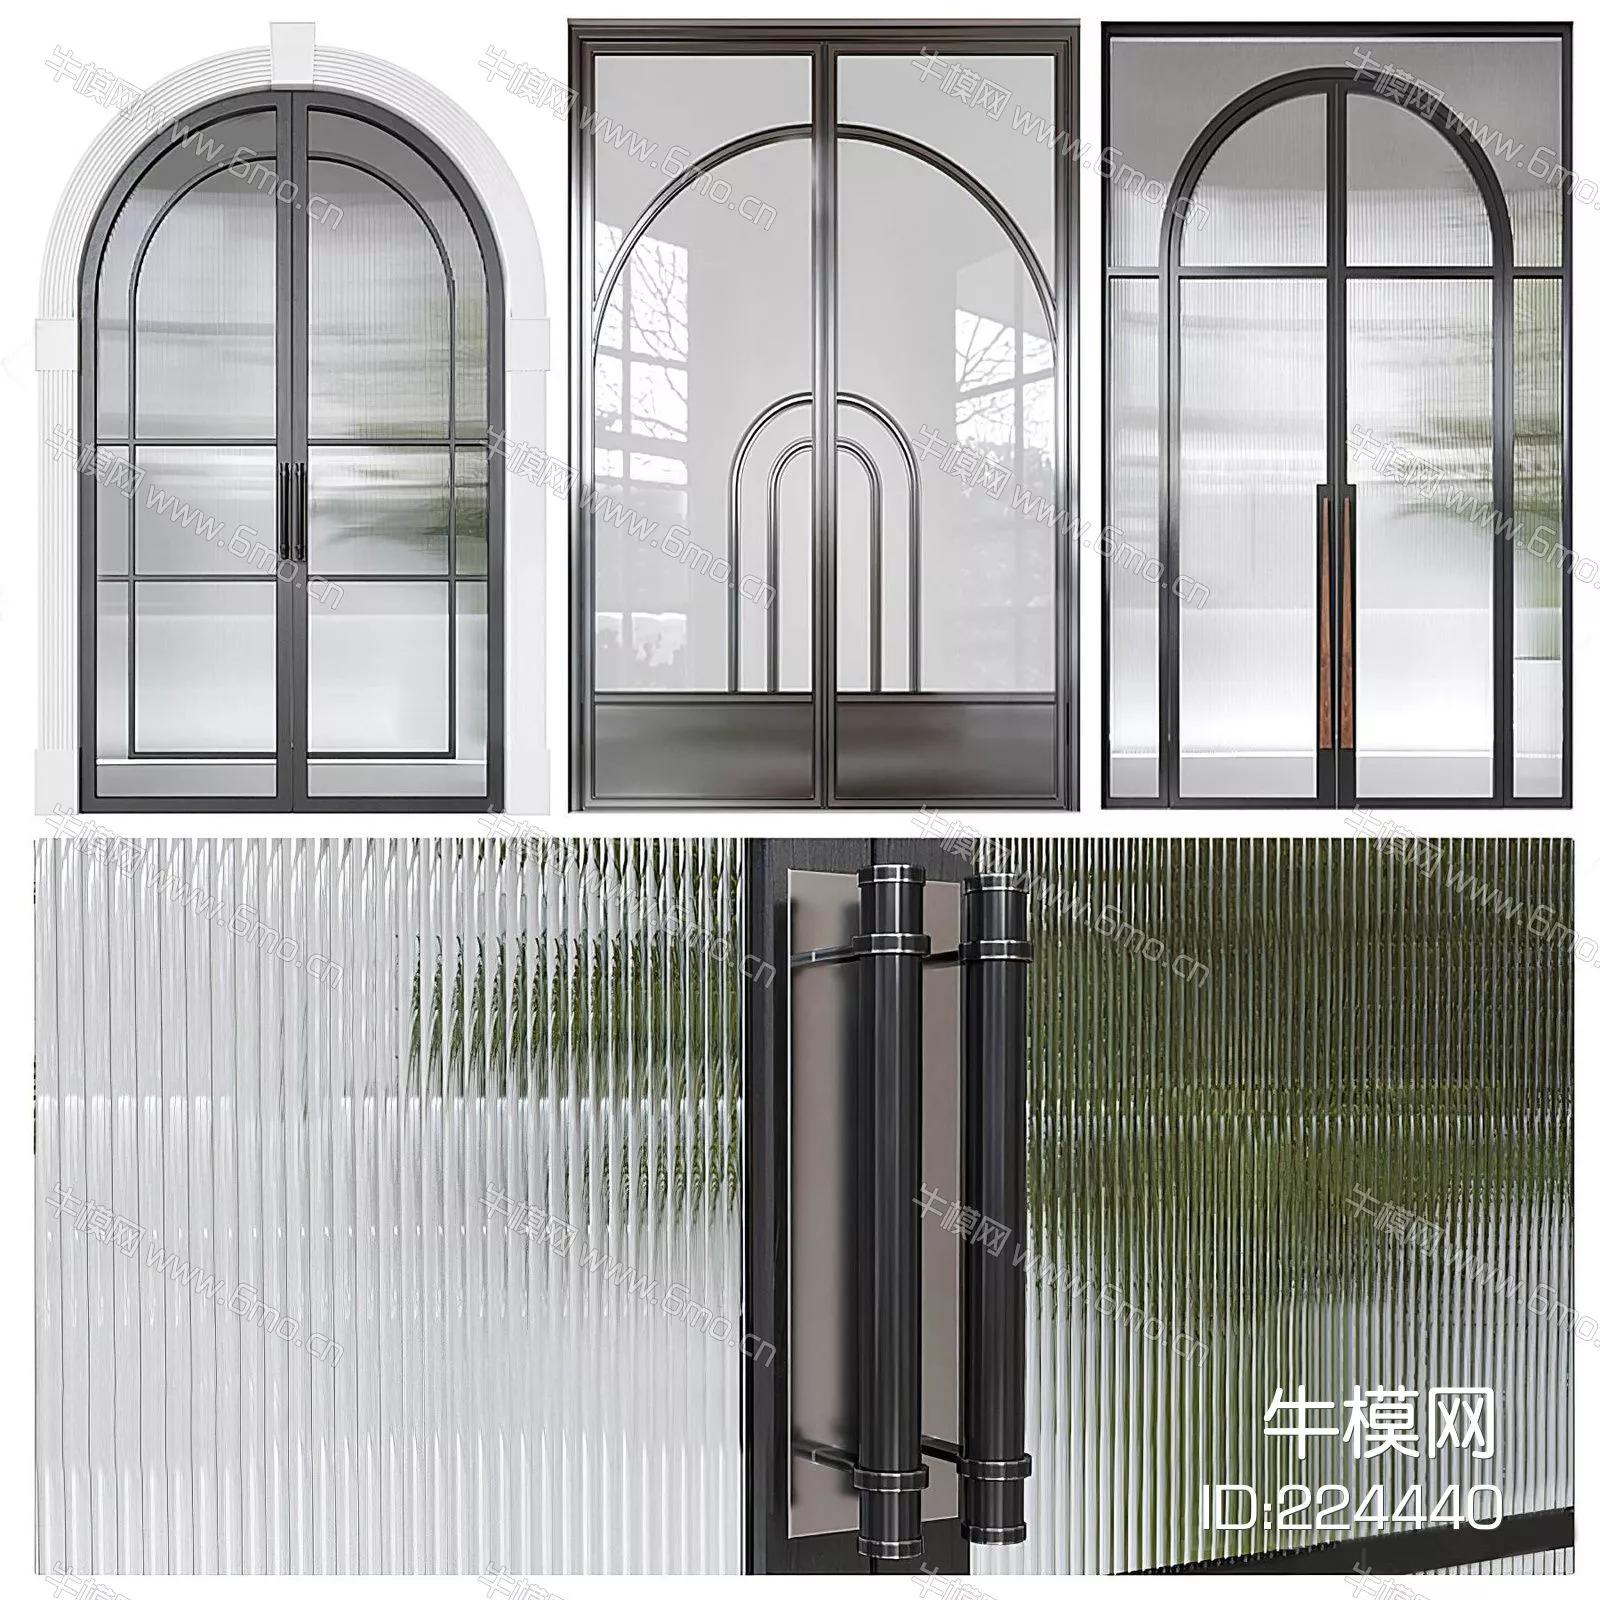 MODERN DOOR AND WINDOWS - SKETCHUP 3D MODEL - ENSCAPE - 224440